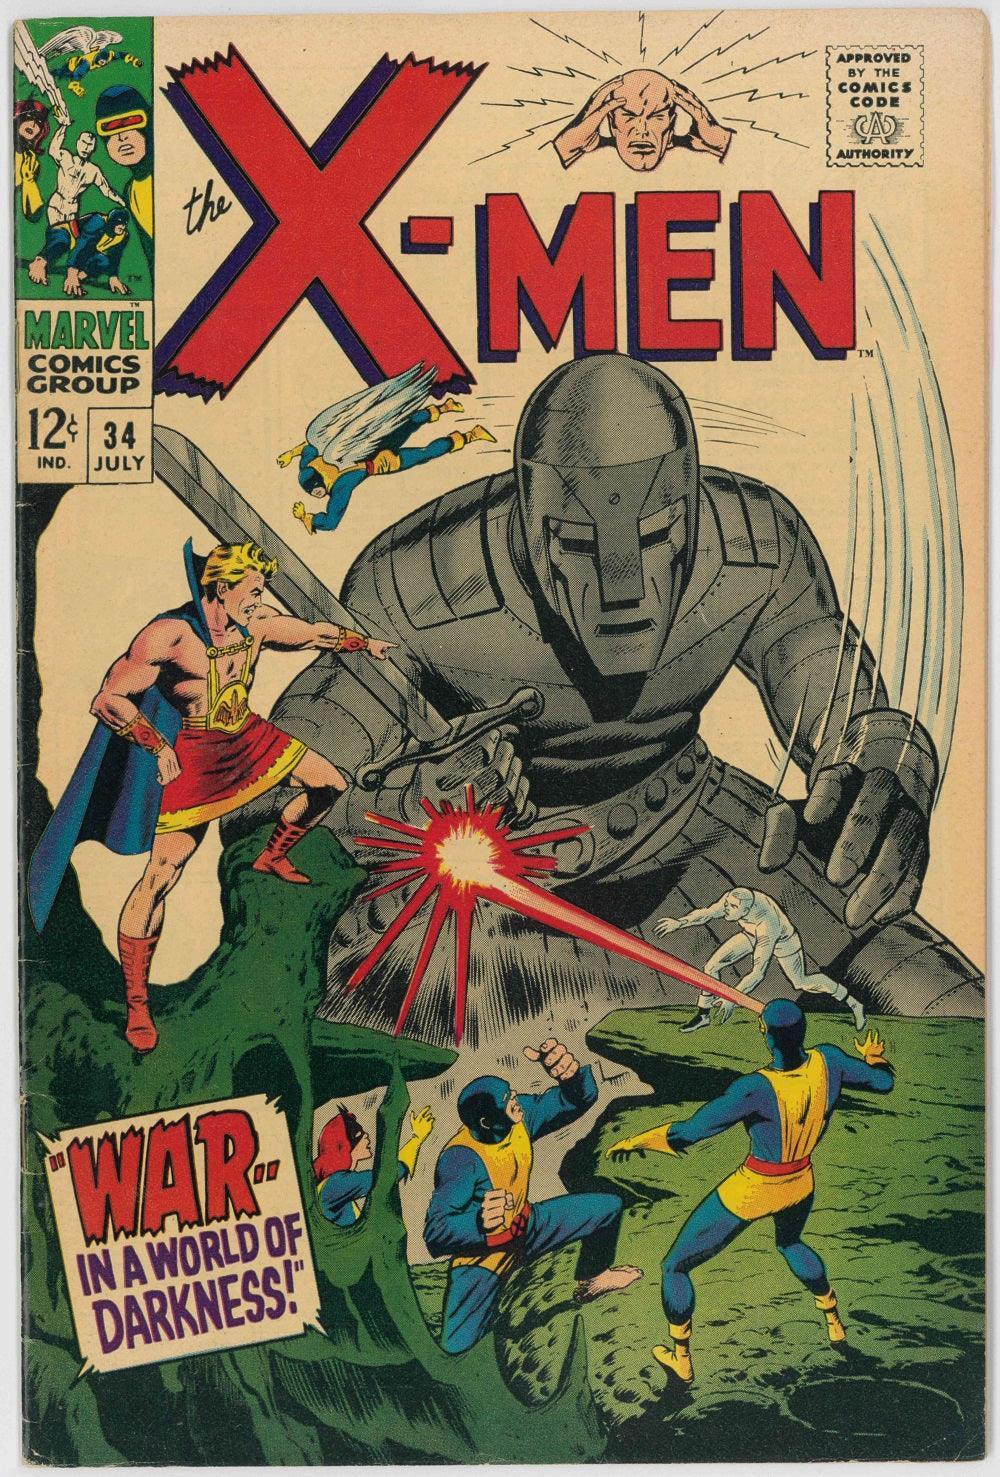 UNCANNY X-MEN (1963) #34 (VF) - Kings Comics